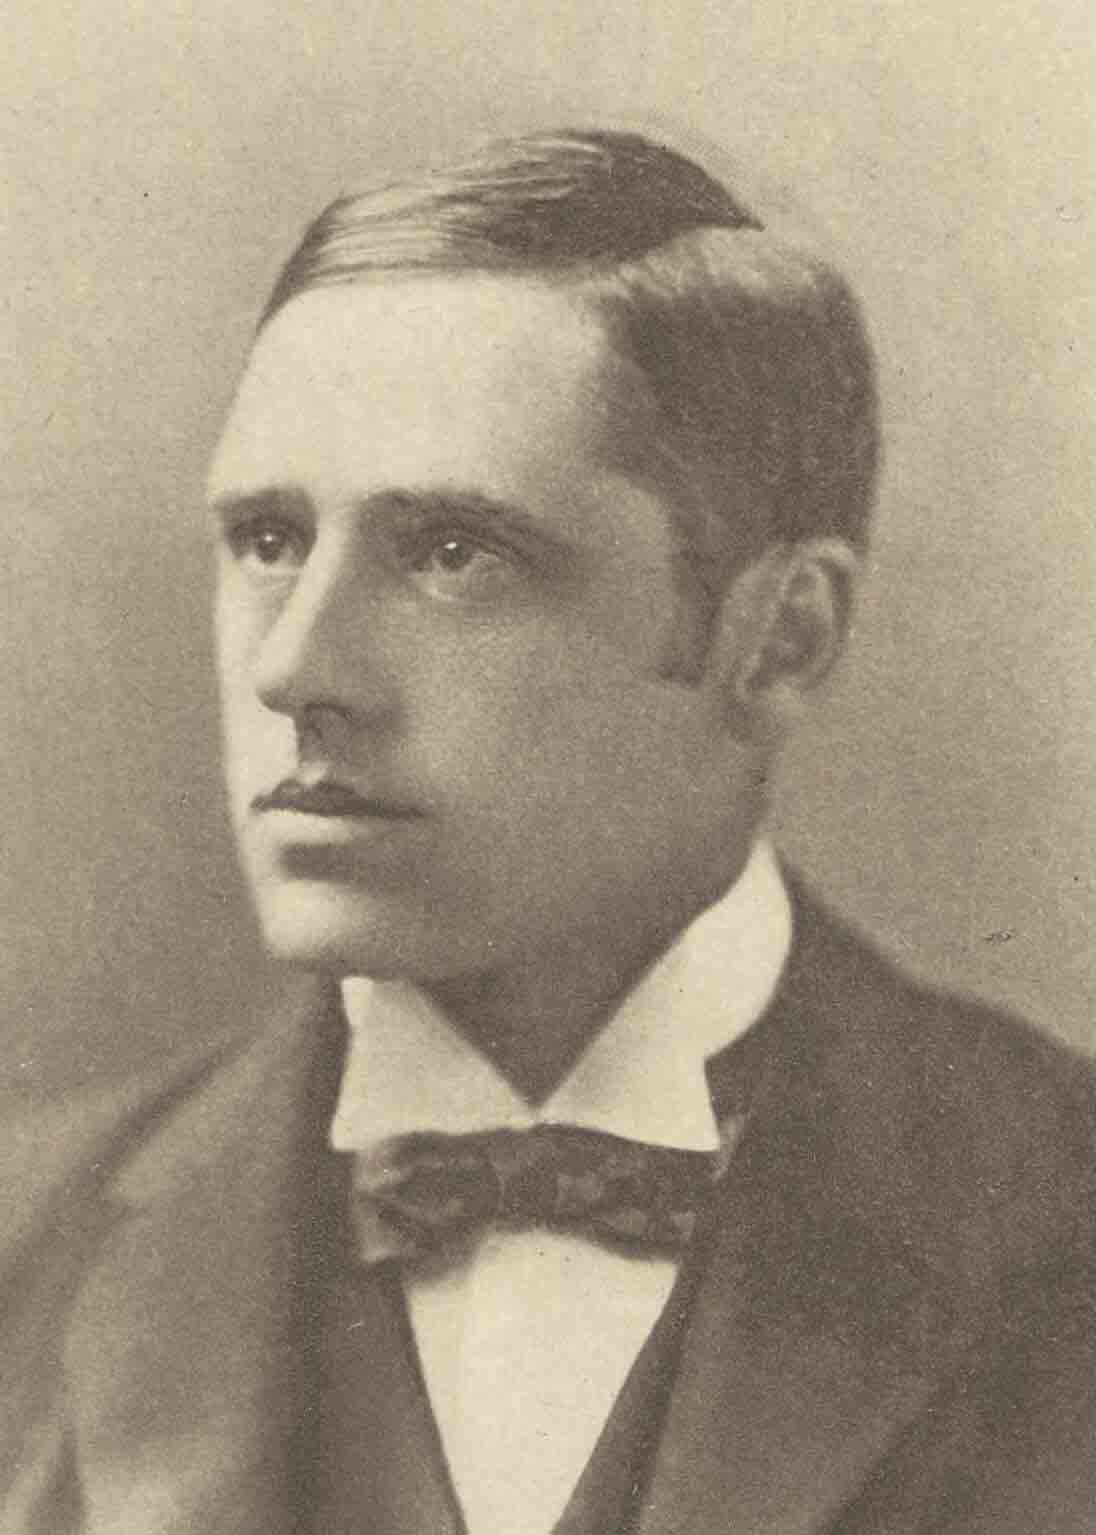 Andrew Barton “Banjo” Paterson in an 1890 AD photo. (National Library of Australia / Public domain)